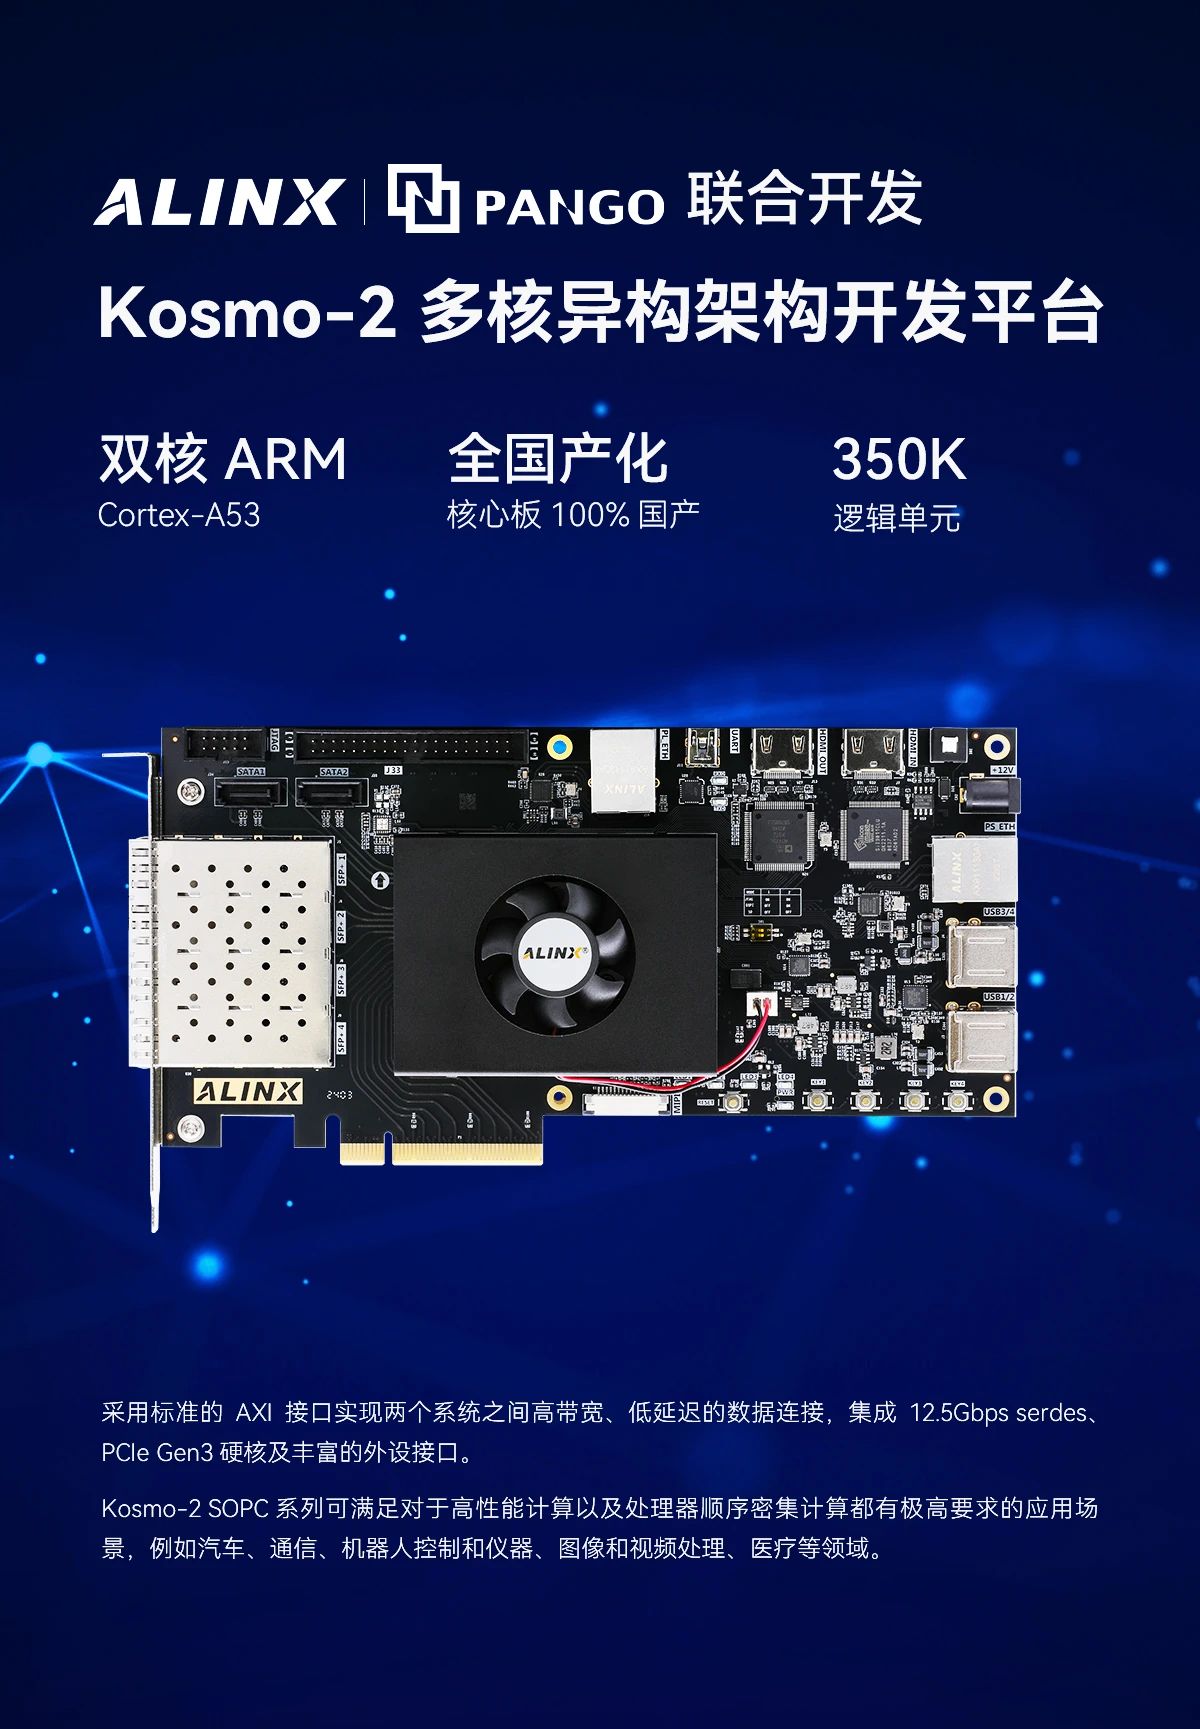 ALINX联合紫光同创发布首款国产Kosmo-2可编程系统平台开发套件